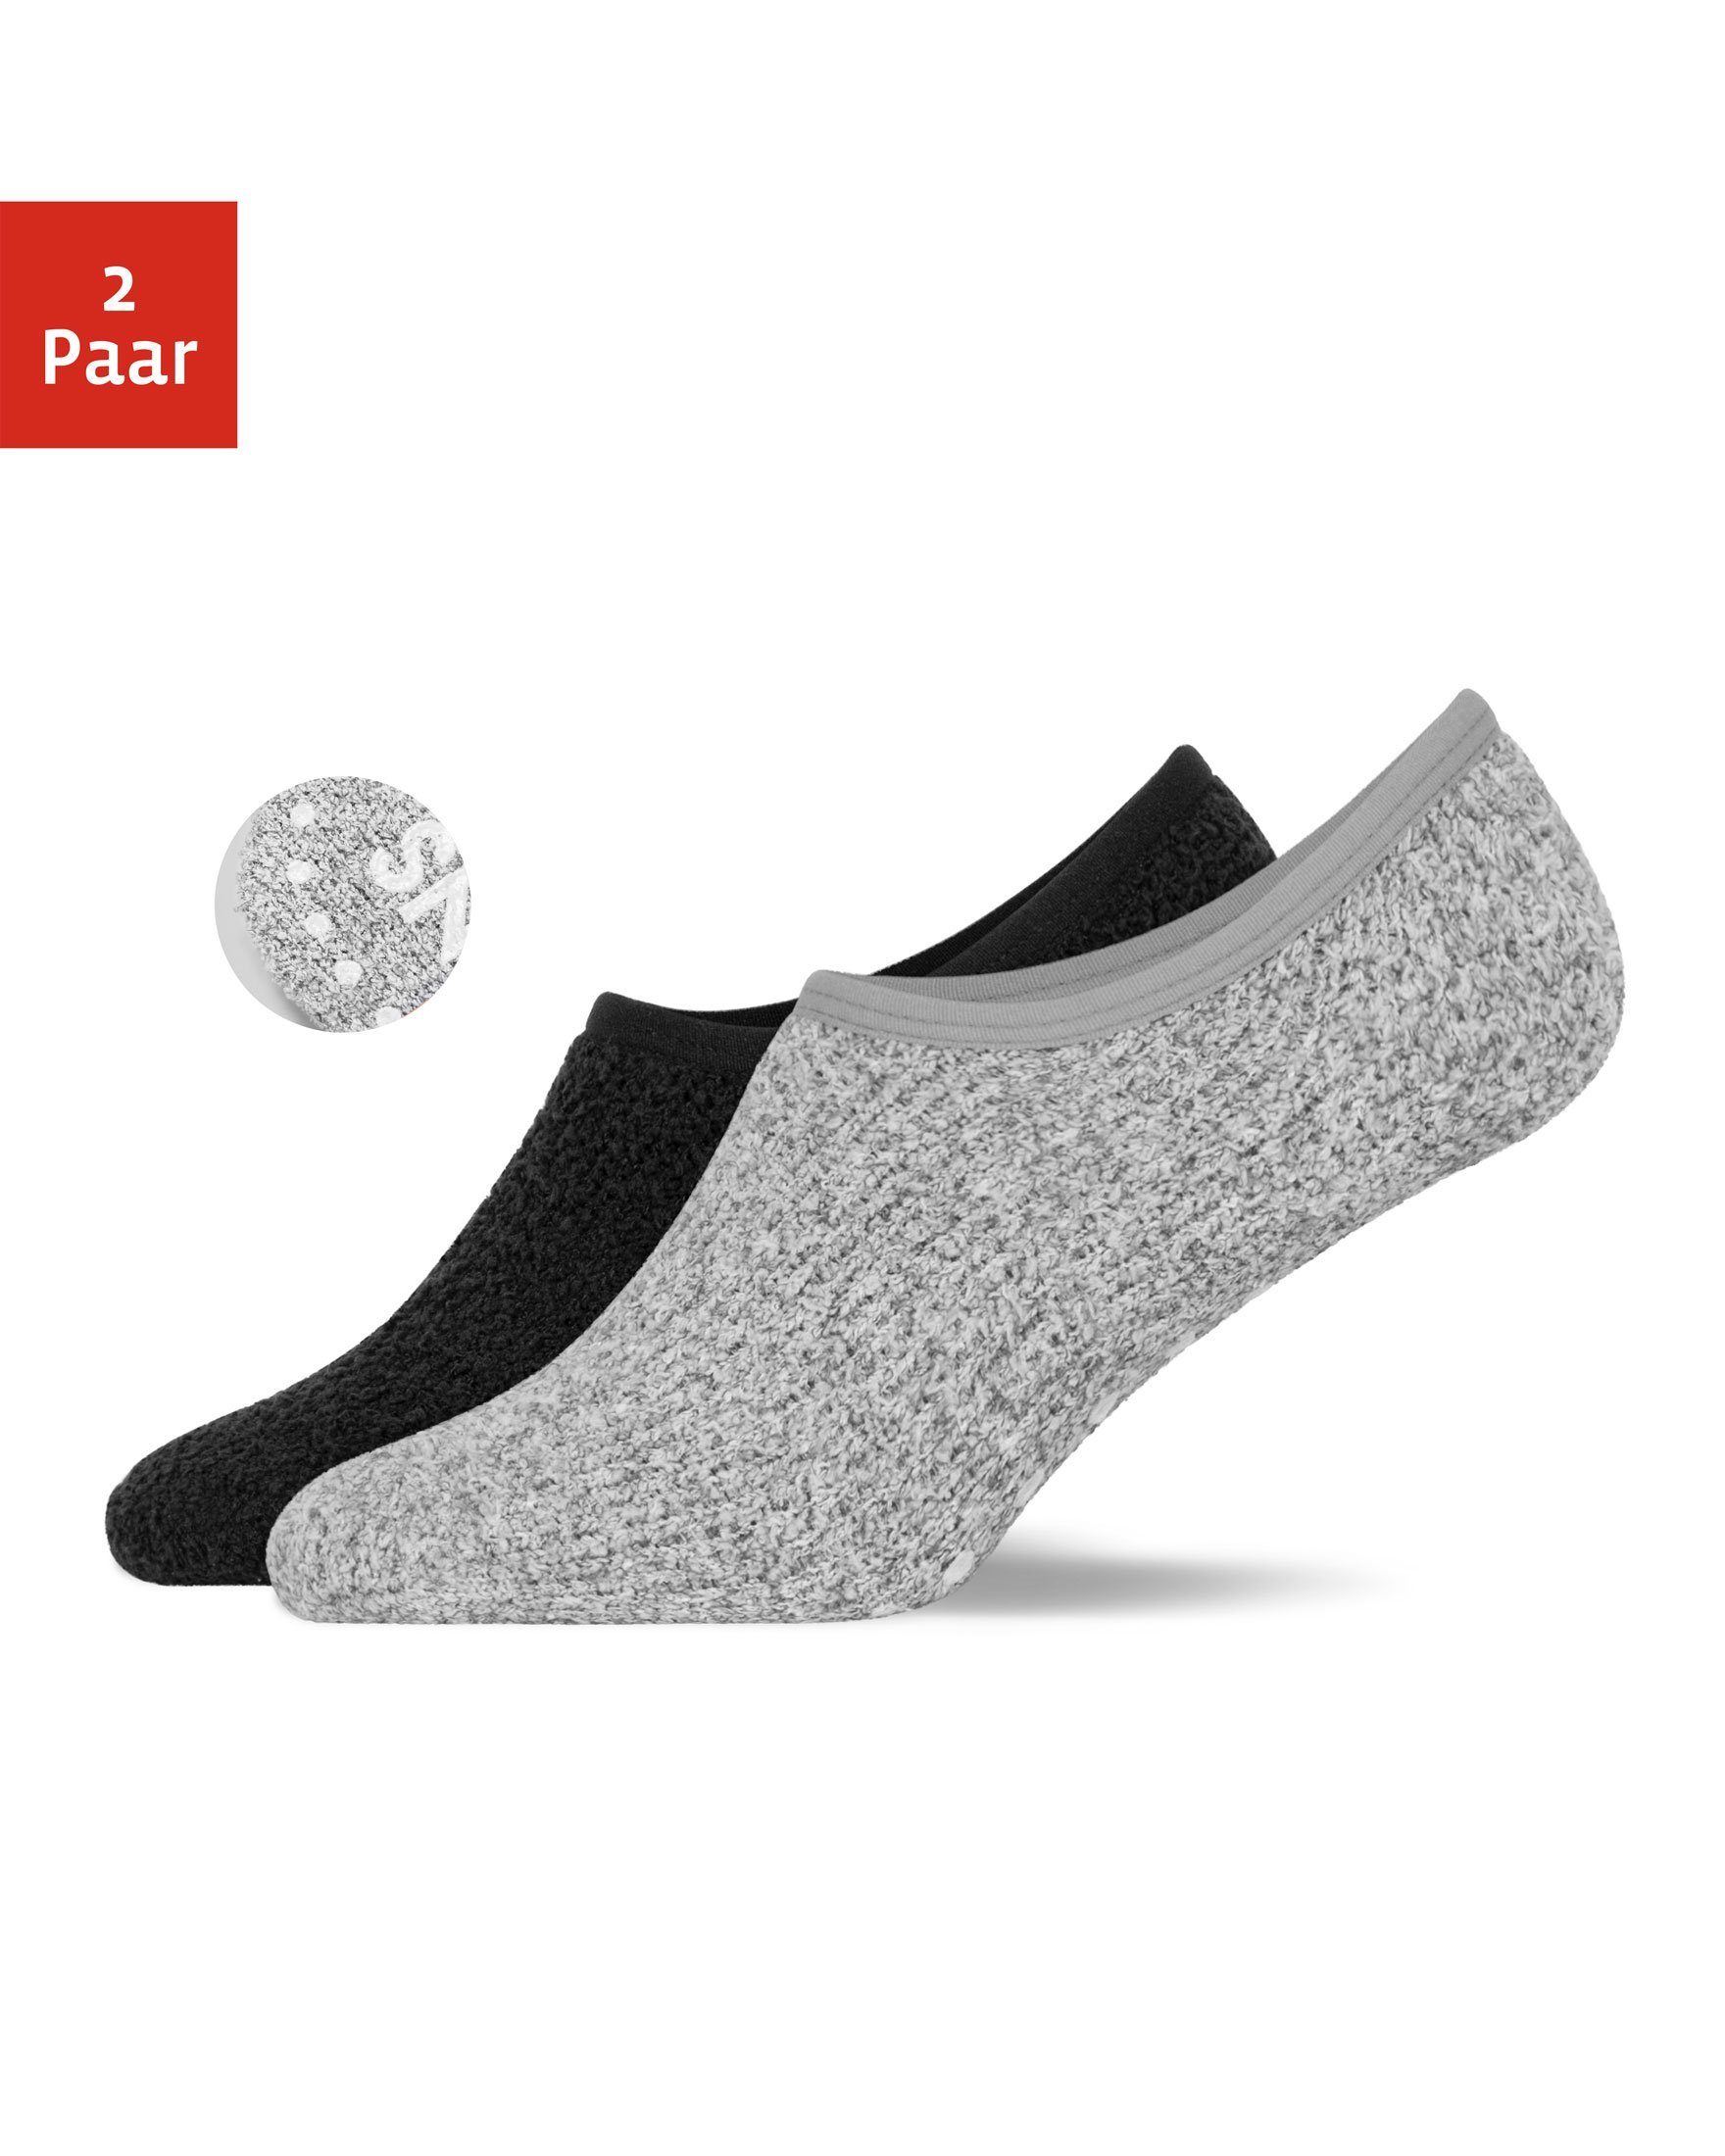 SNOCKS Füßlinge Fluffy Invisible Socks Sneaker Socken Damen Herren (2-Paar) Anti-Rutsch-Socken, kuschelig weich für den Winter 1x schwarz, 1x grau